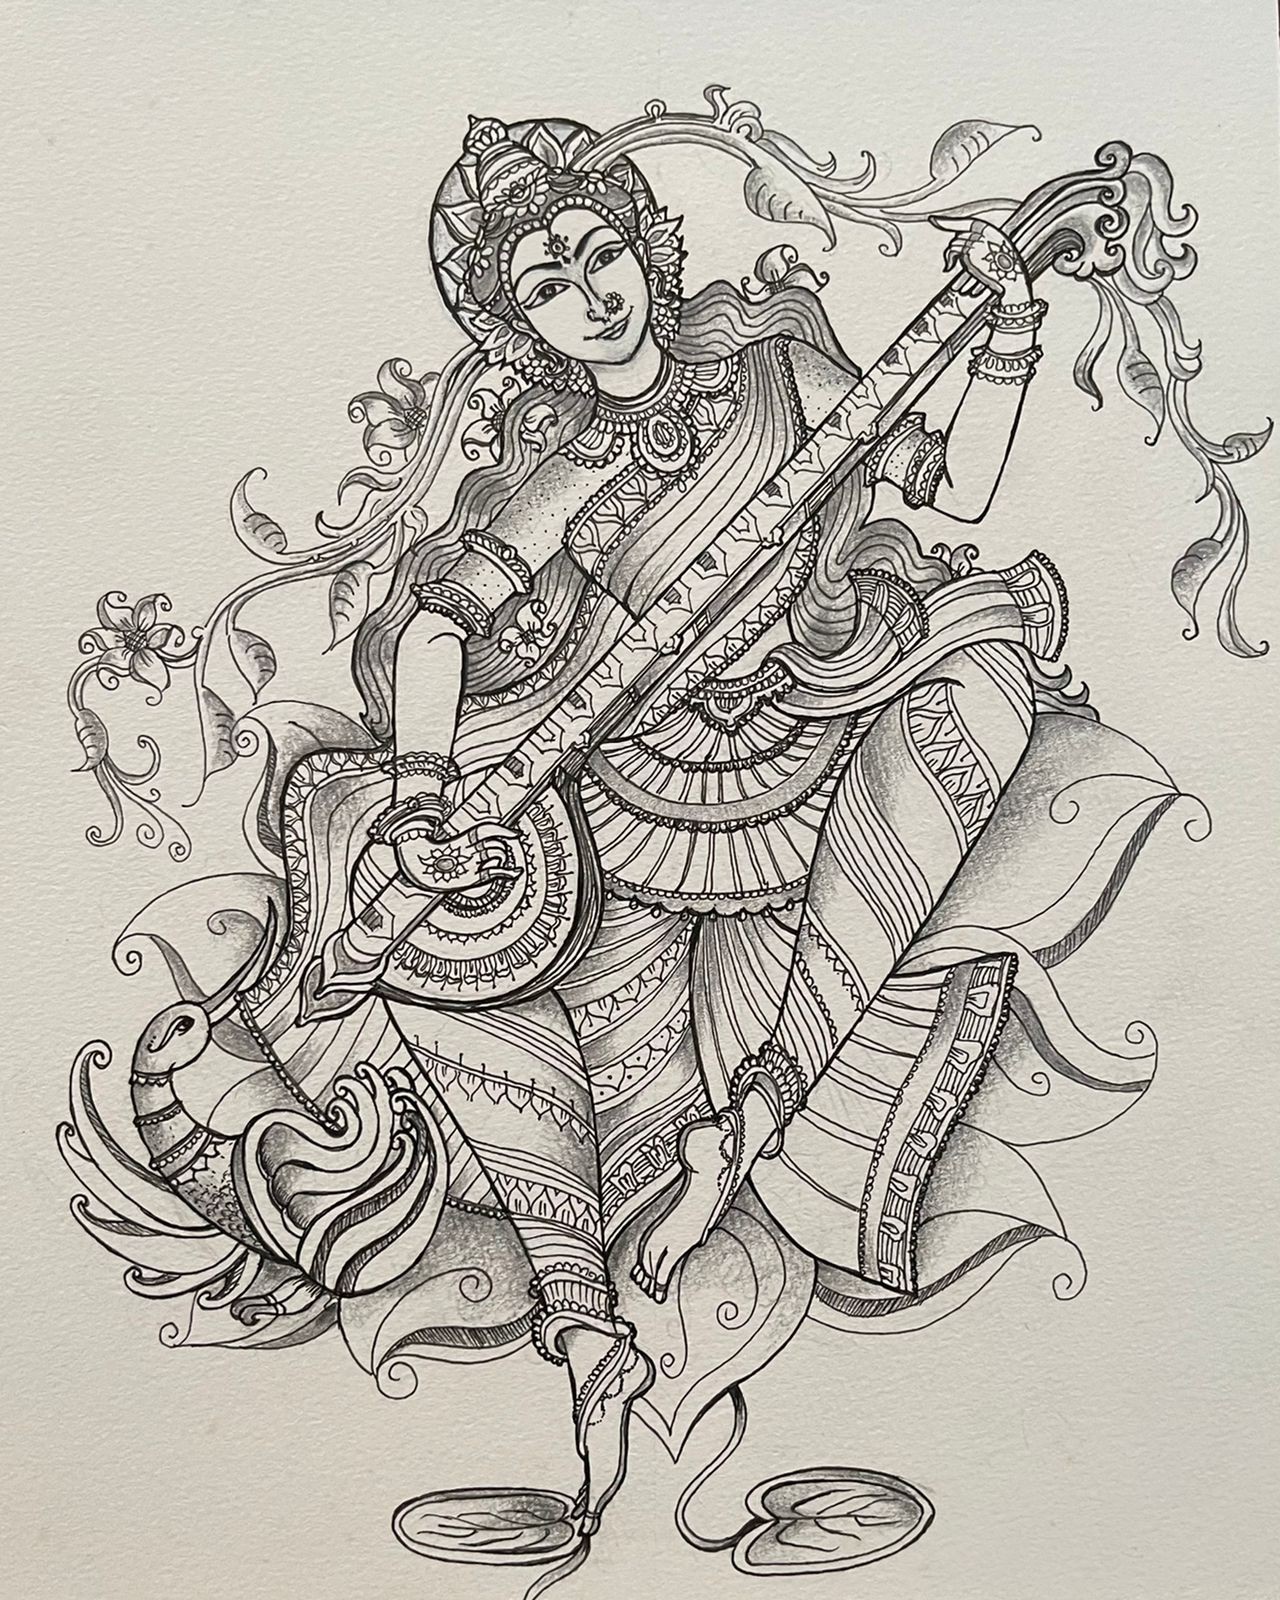 The Goddess by Anusha Seermaran